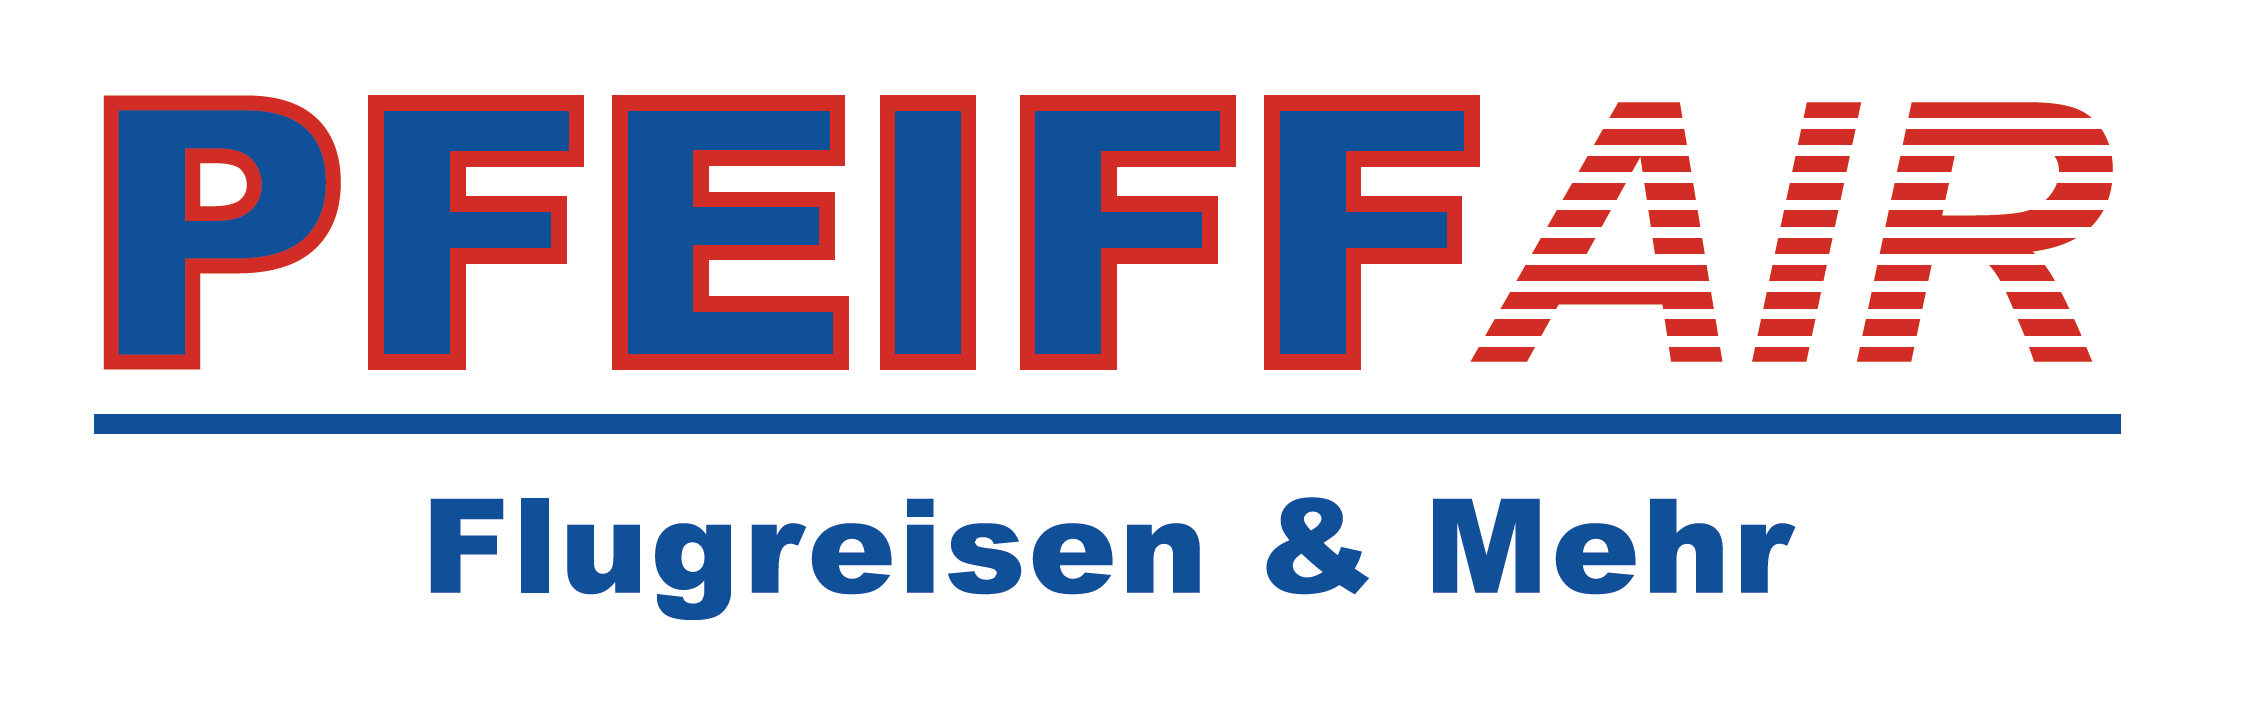 PfeiffAIR Logo